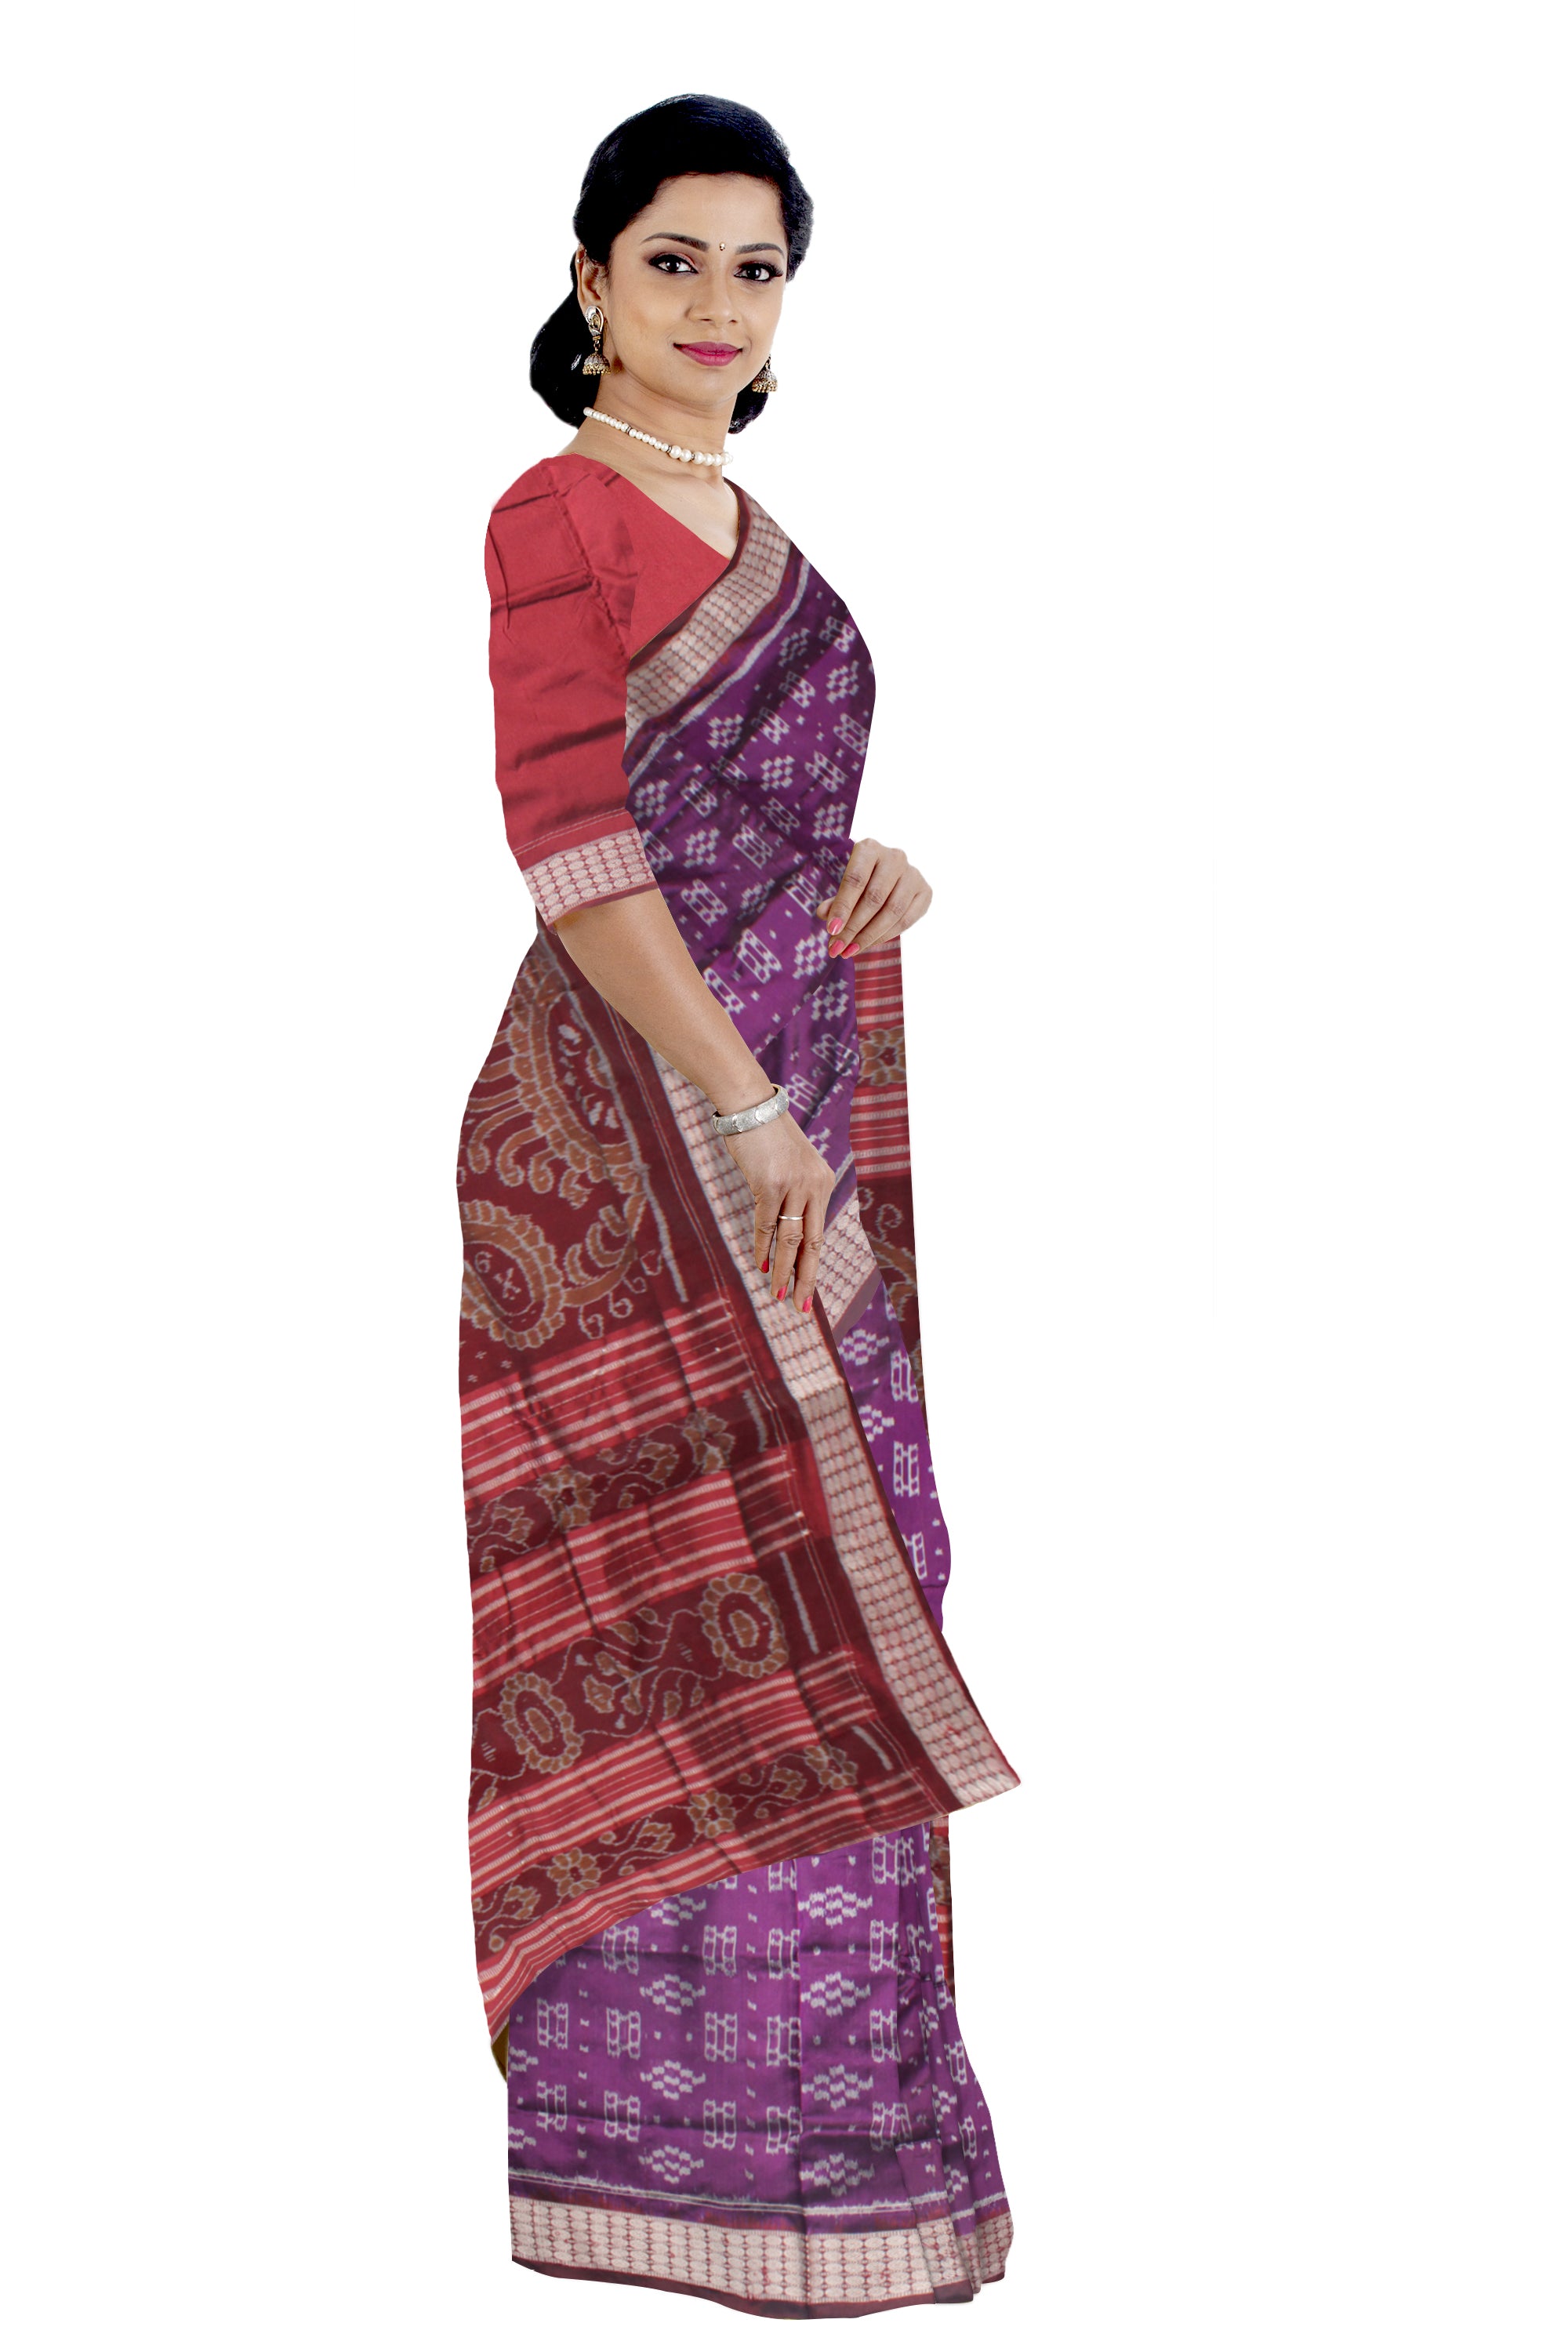 Full Body Boxes Pattern Pata Saree In Red And Maroon Color., Party Wear  Saree, Roopkatha Designer Sarees, फैंसी साड़ी - Koshali Arts & Crafts  Enterprise,, Sonepur